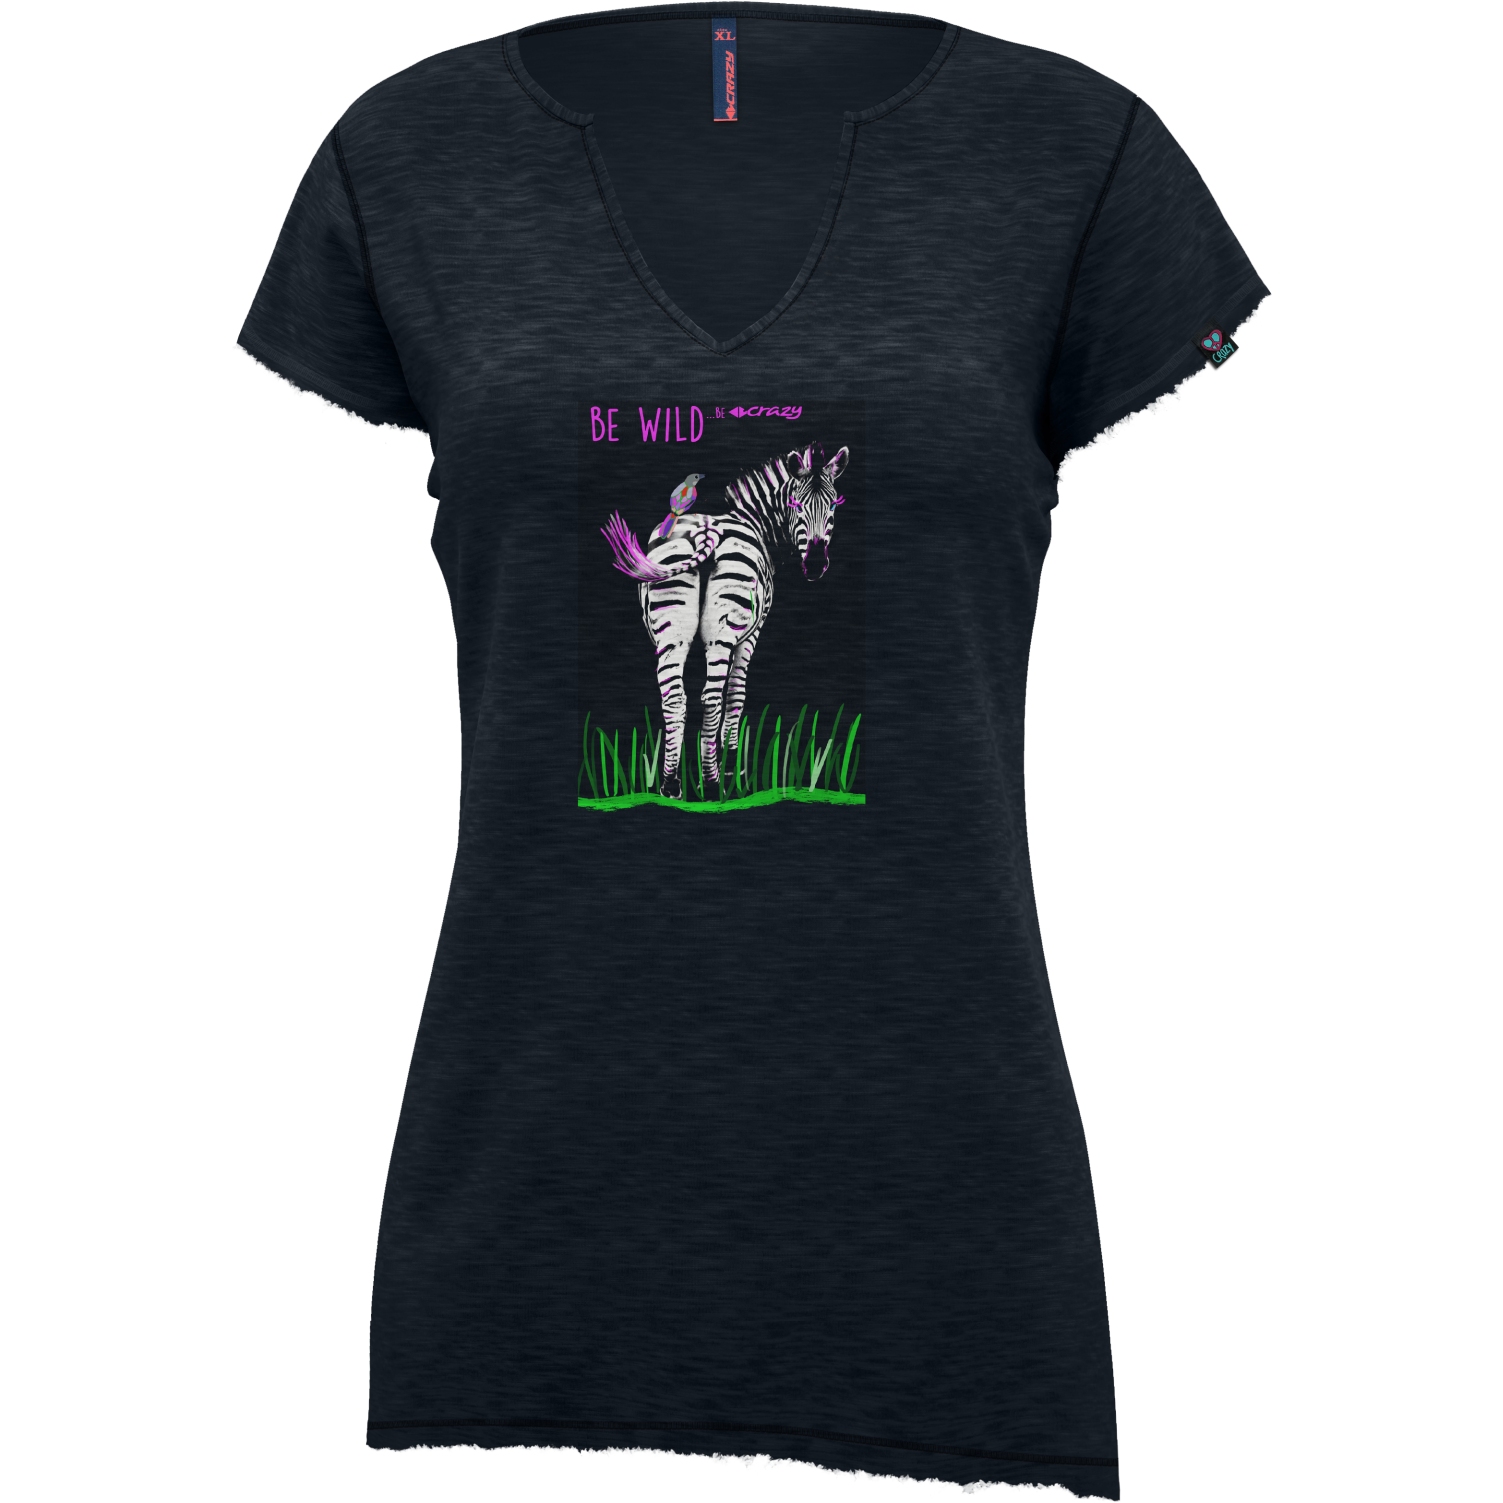 Productfoto van Crazy Idea Mandala T-Shirt Dames - Zwart/Zebra